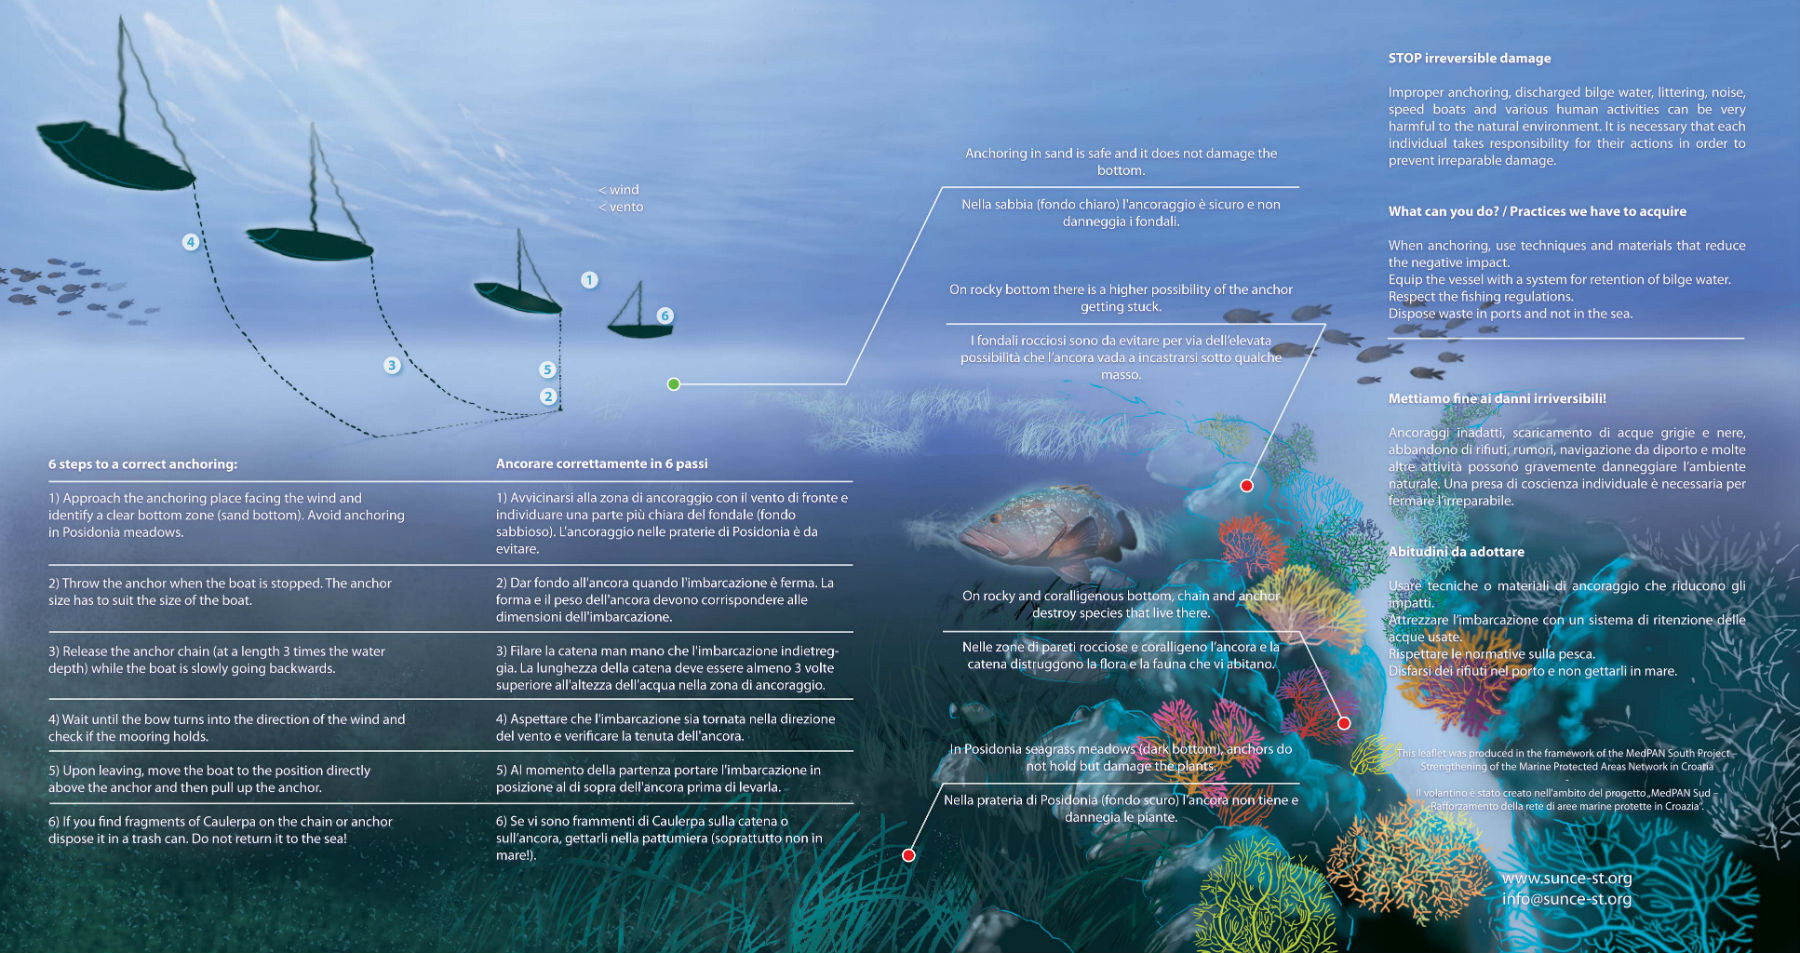 How to reduce impact on marine environment in Croatia